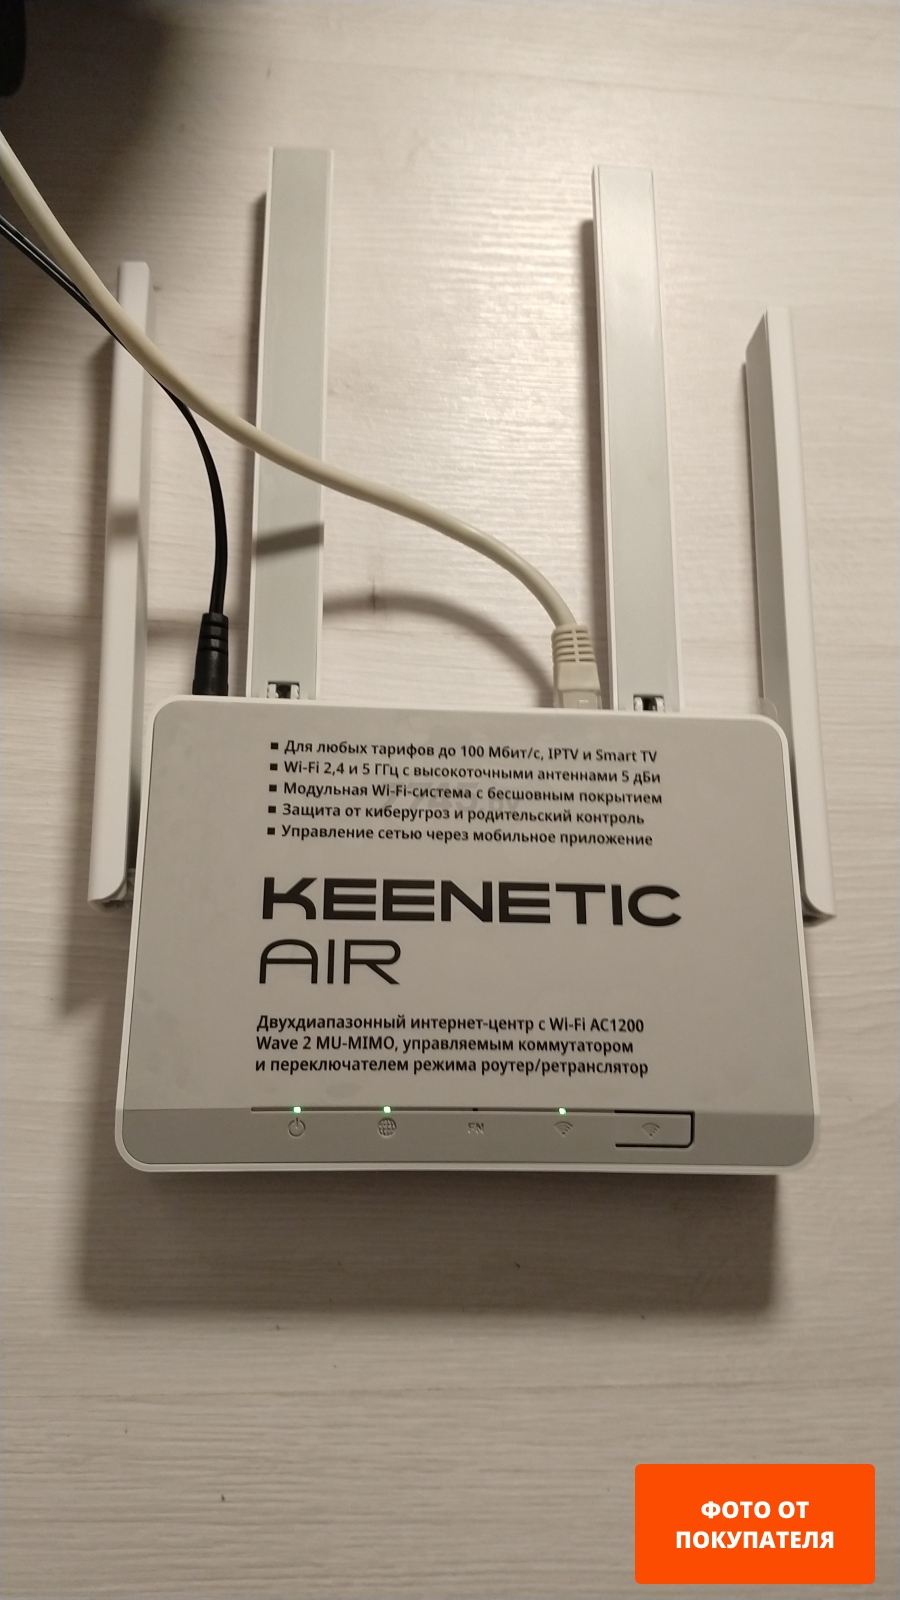 Wi-Fi роутер KEENETIC Air KN-1611